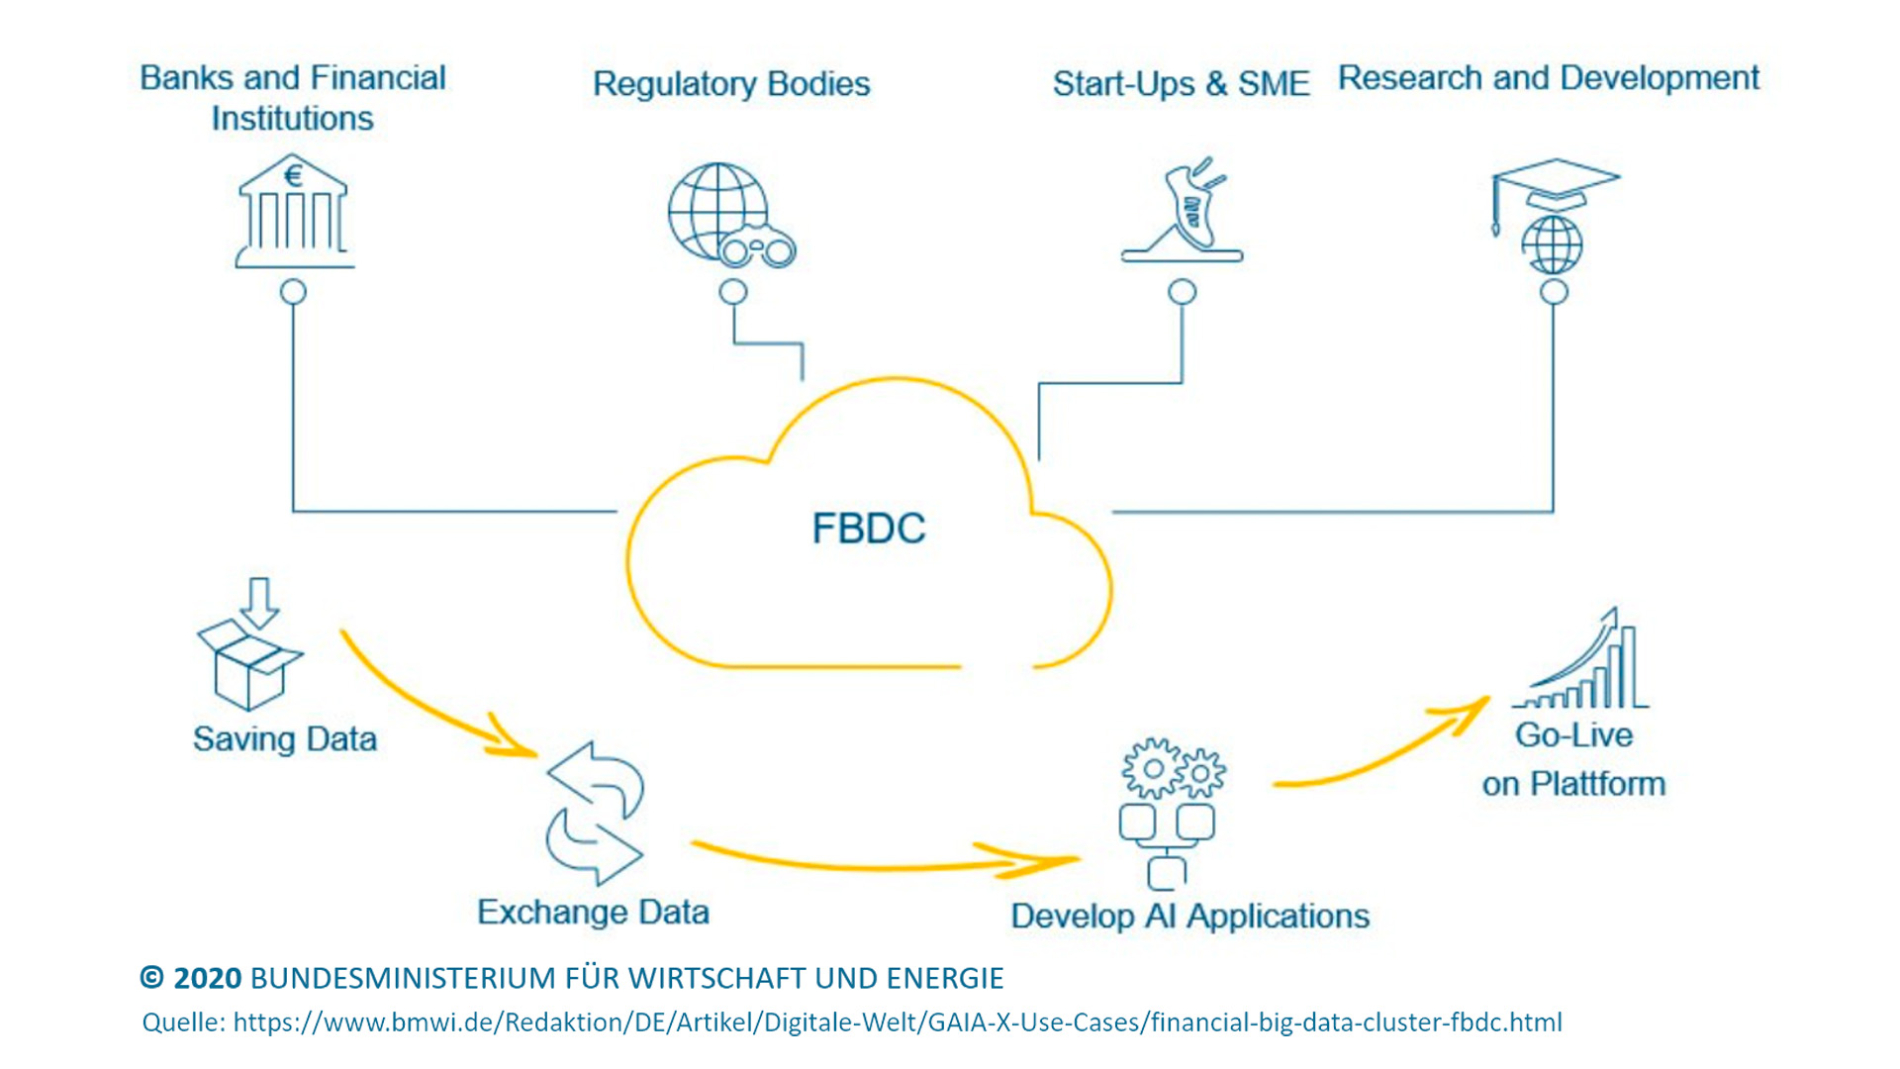 FDBC eco system